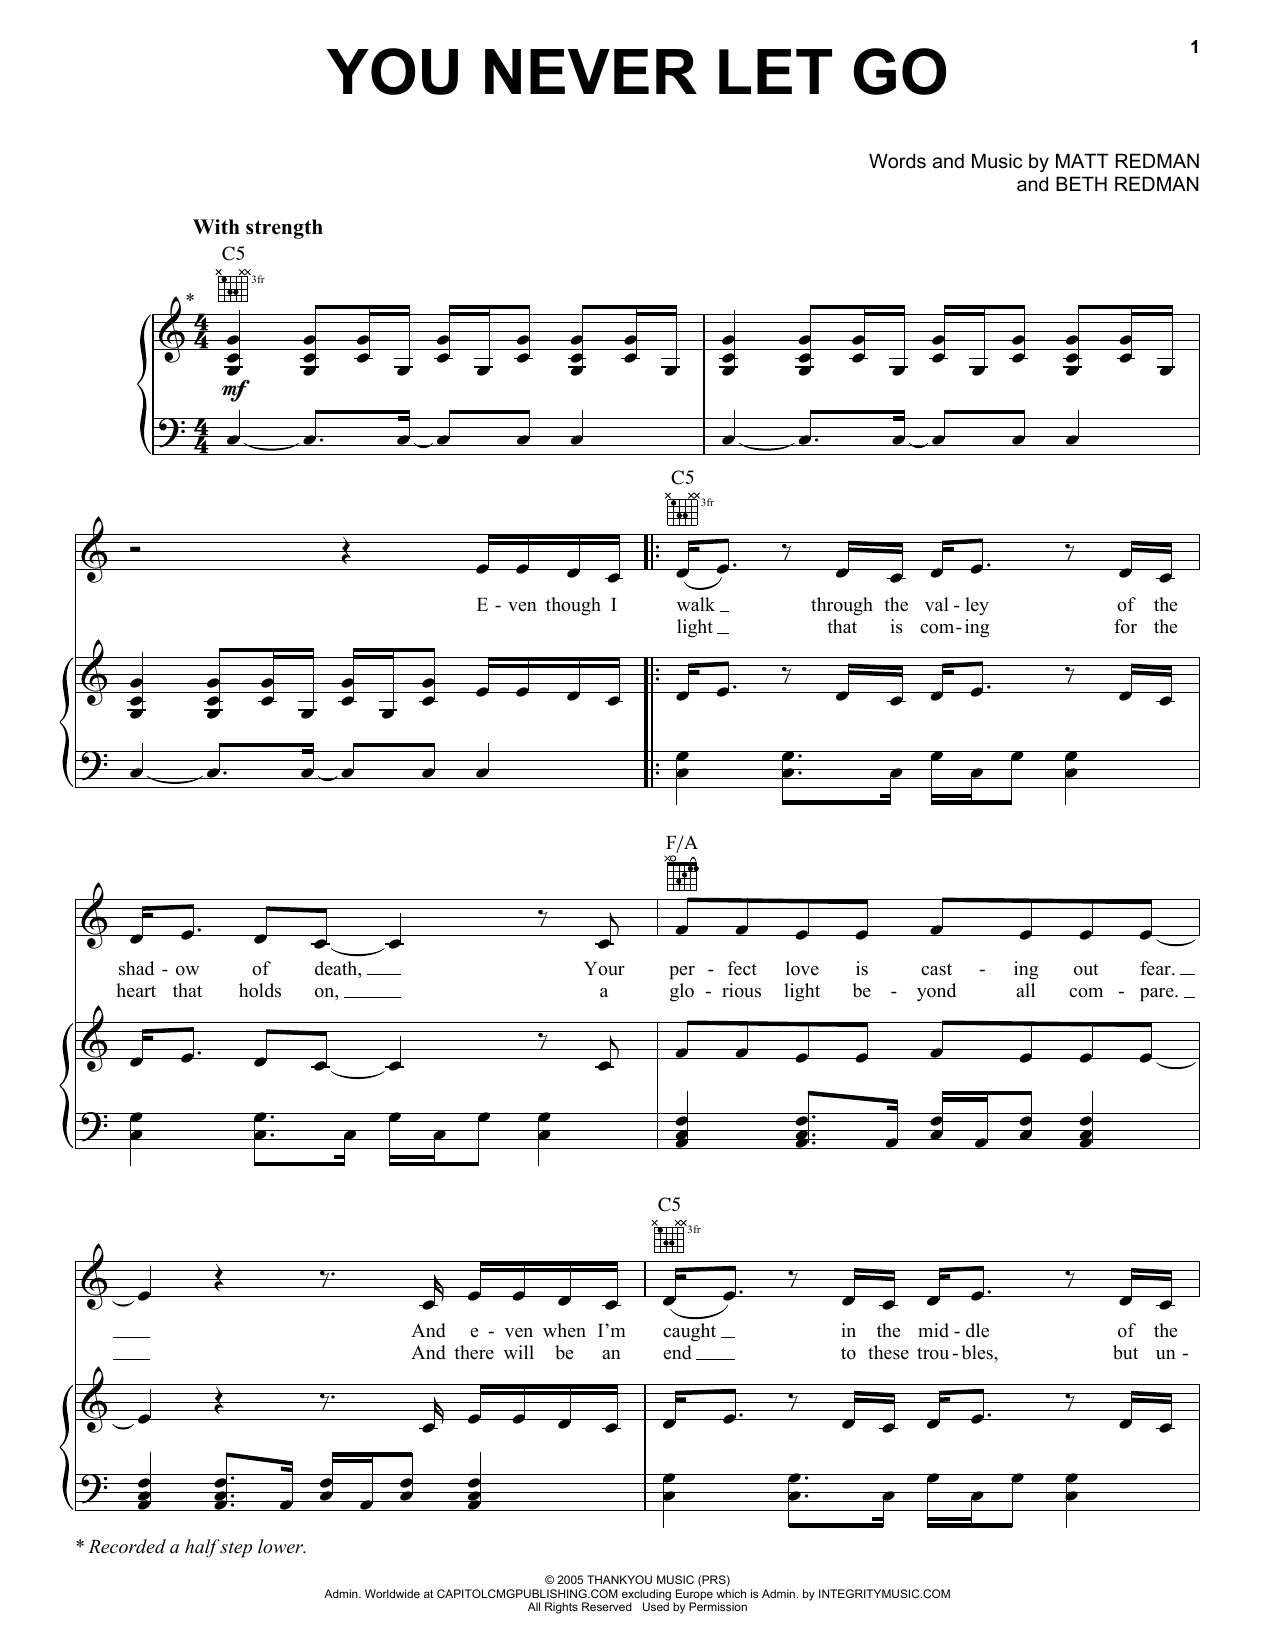 Matt Redman You Never Let Go Sheet Music Notes & Chords for Melody Line, Lyrics & Chords - Download or Print PDF